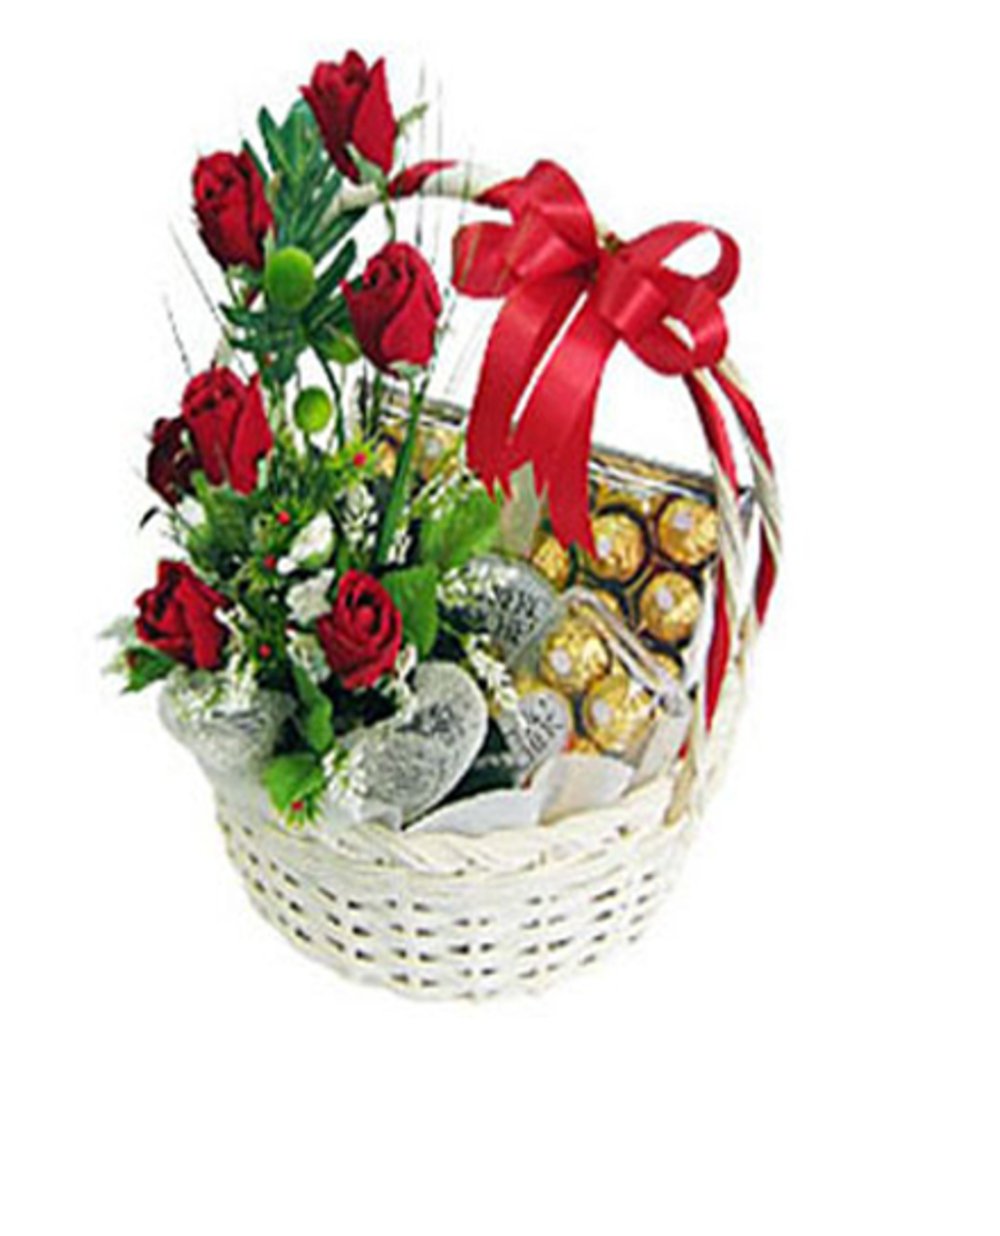 Ferrero Rocher Chocolates & Flowers Combo